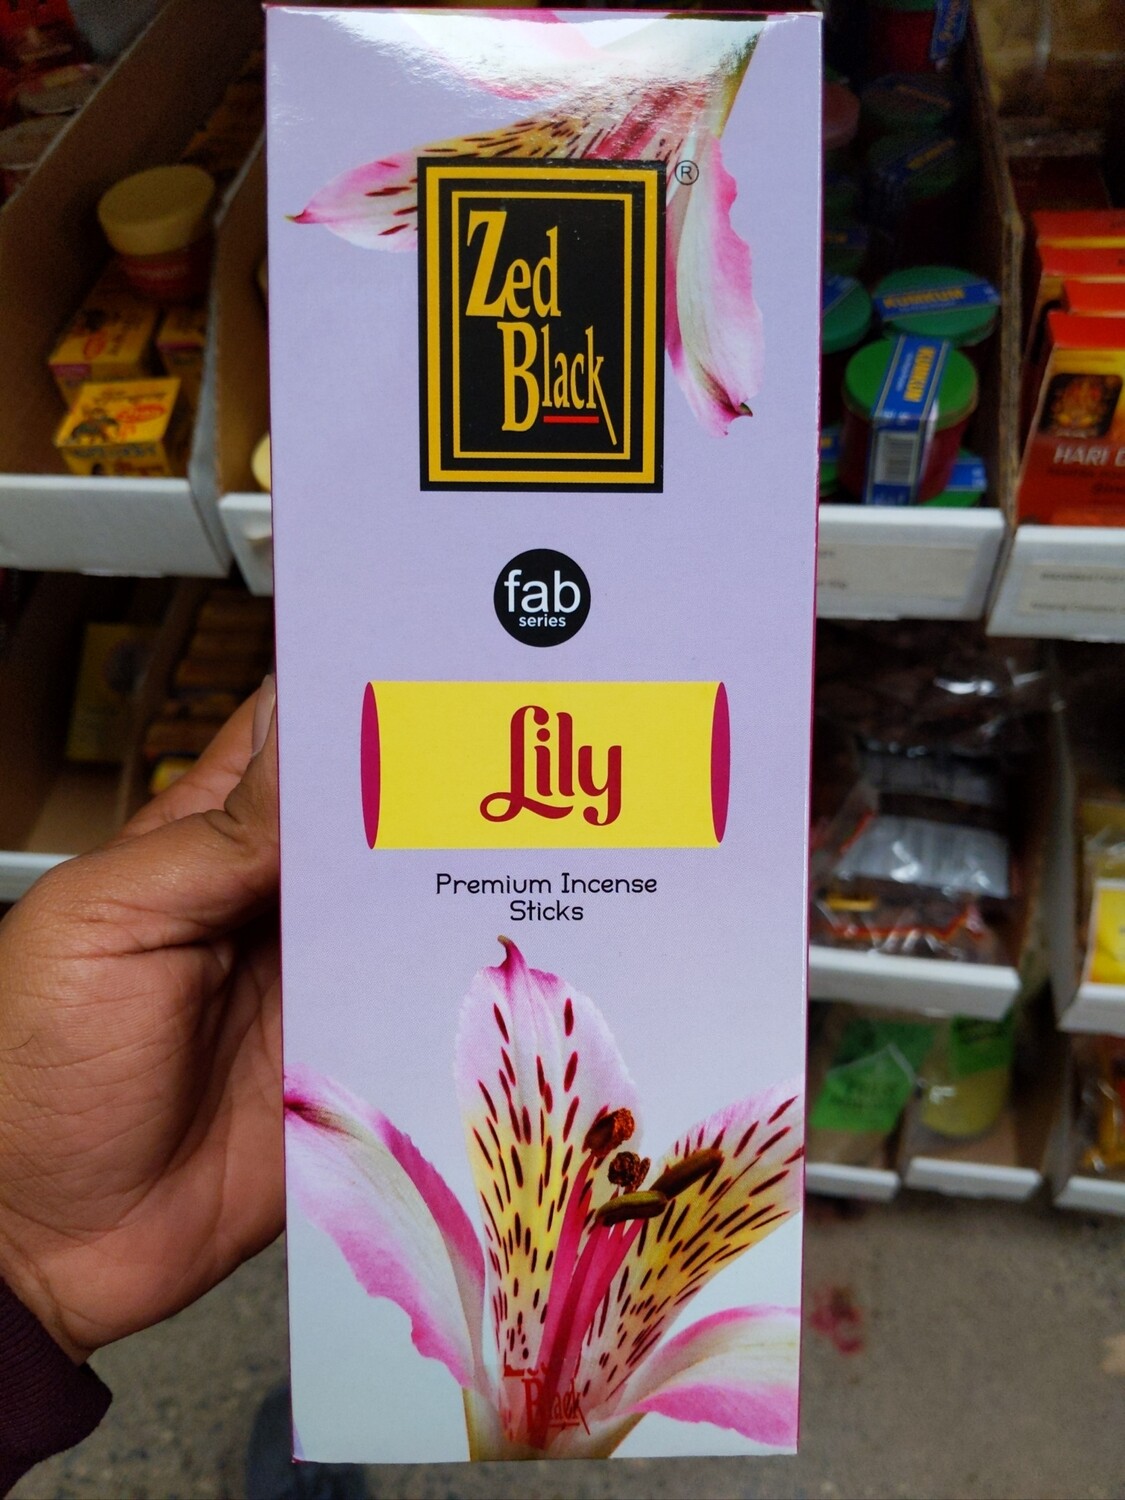 Zed Black Lily Premium Incense Sticks